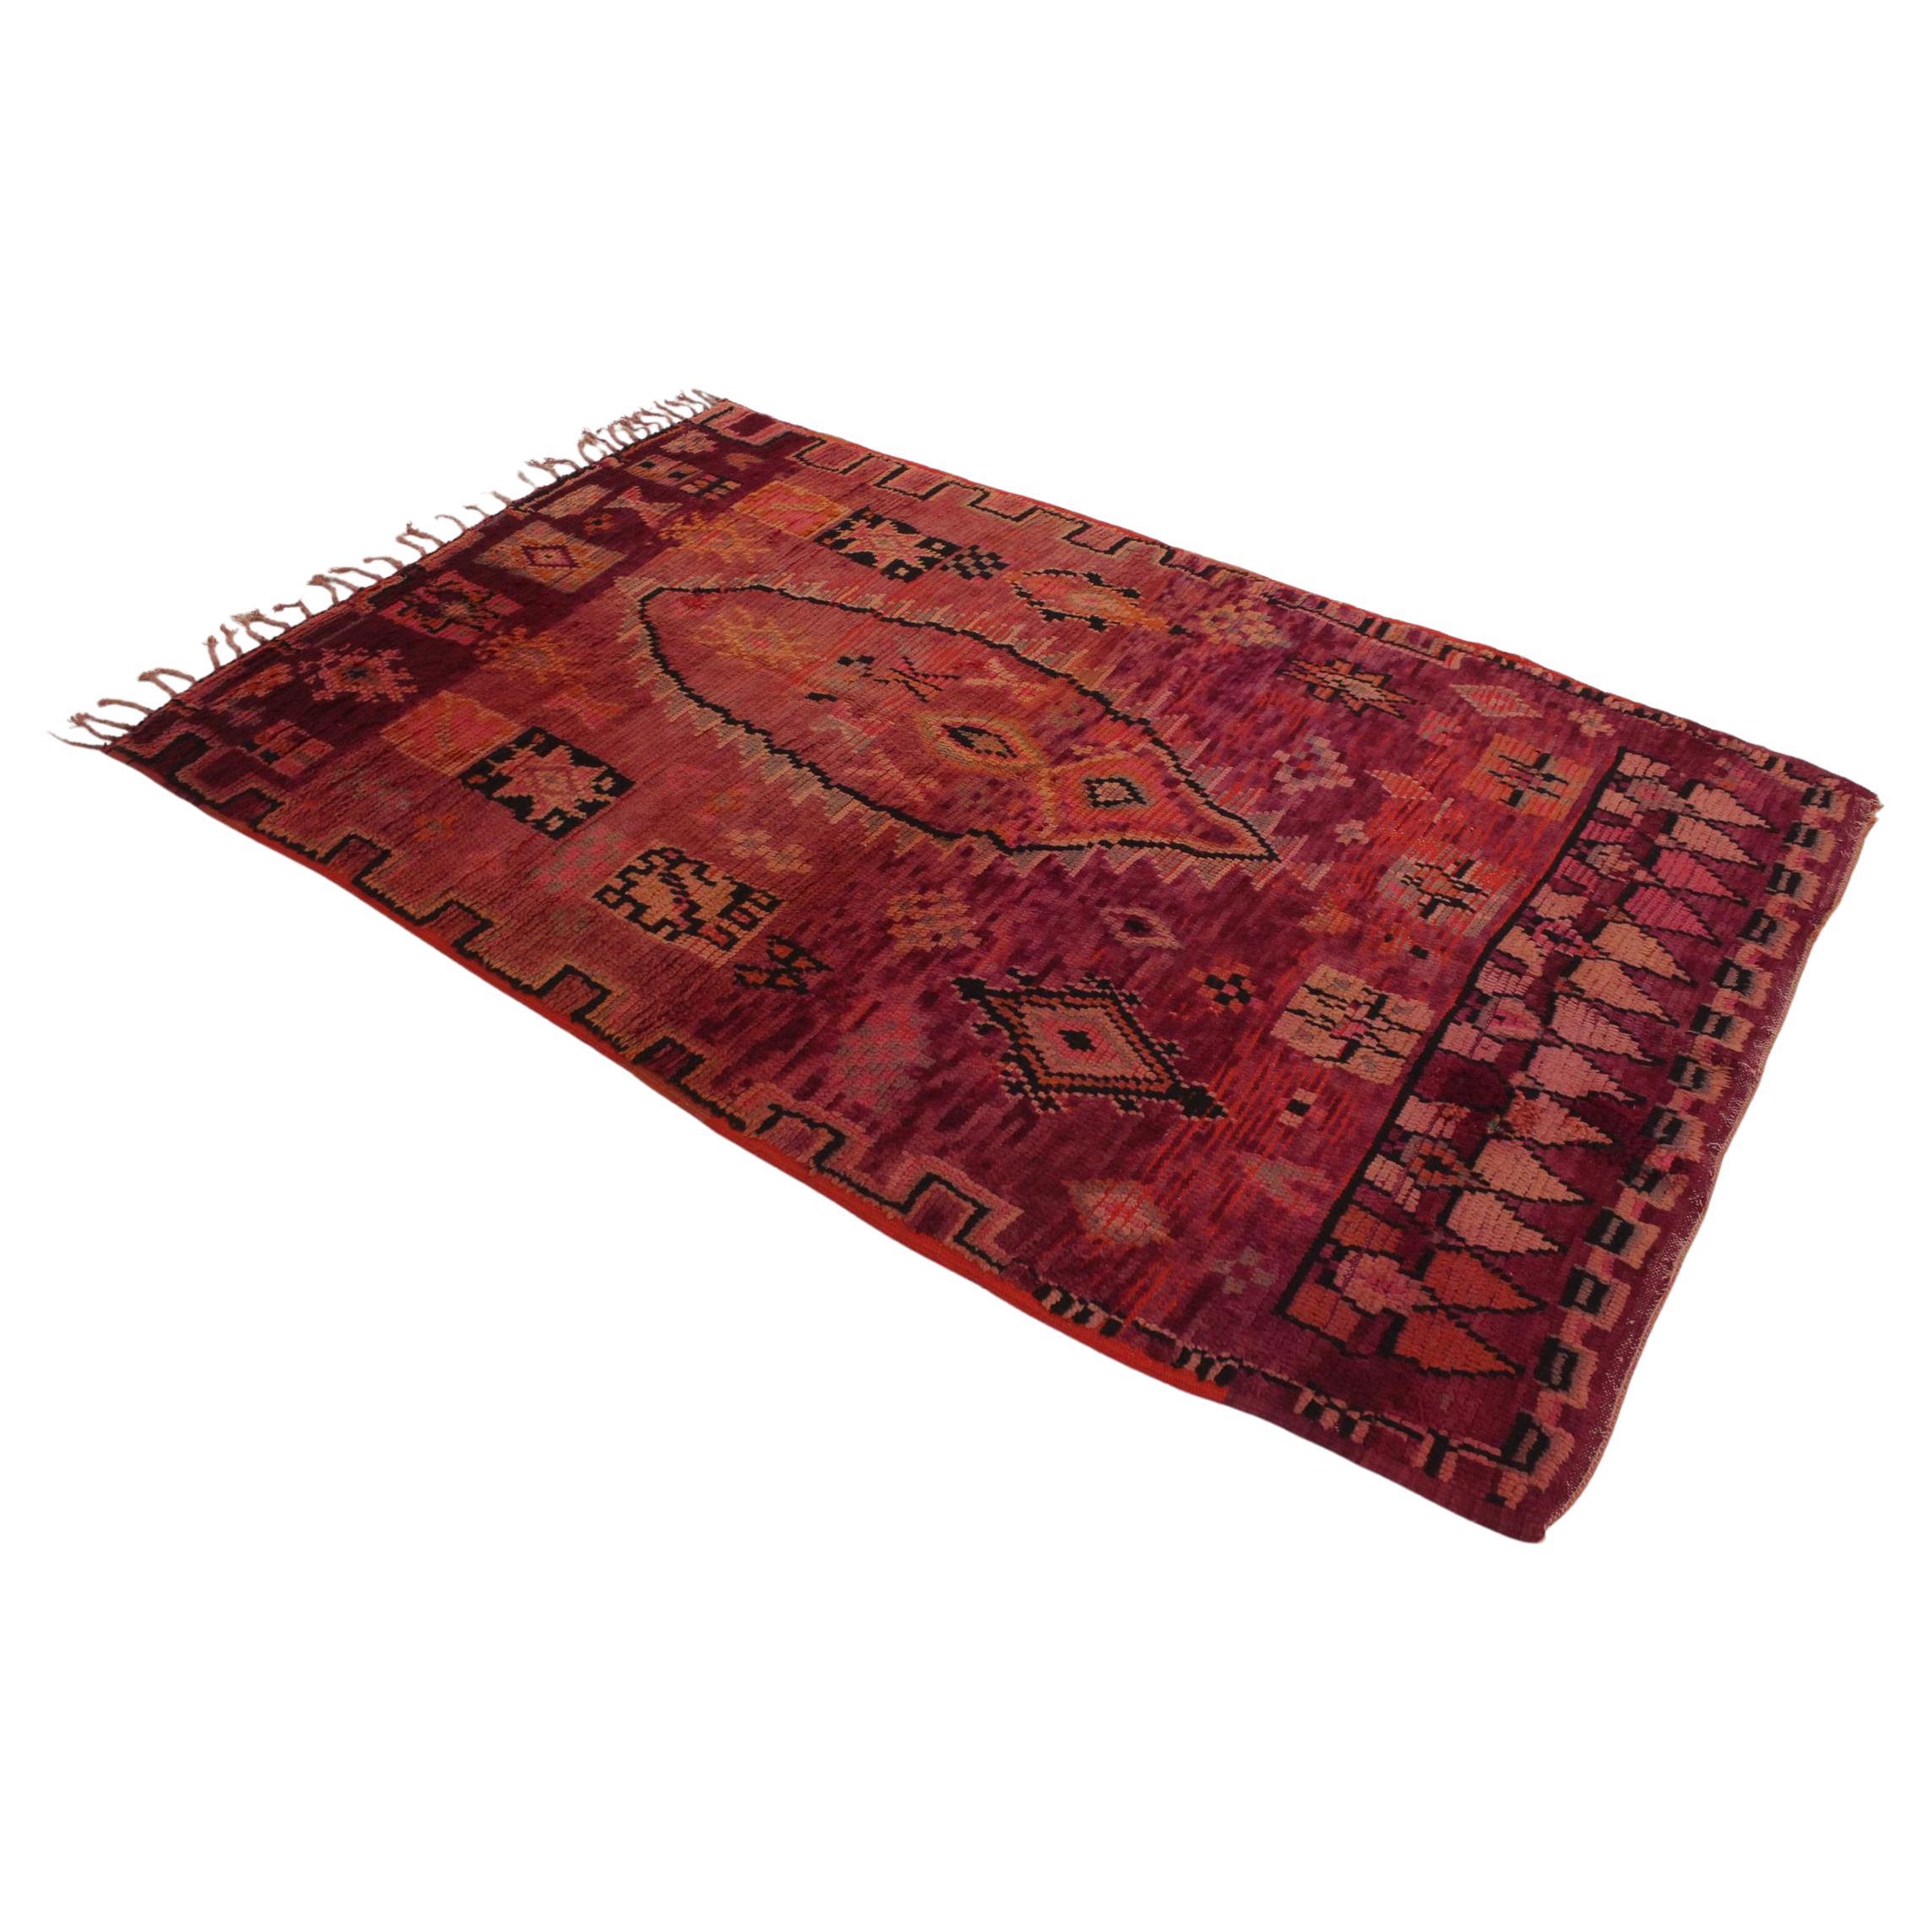 Vintage Moroccan Boujad rug - Red/purple - 5.3x8.1feet / 162x247cm